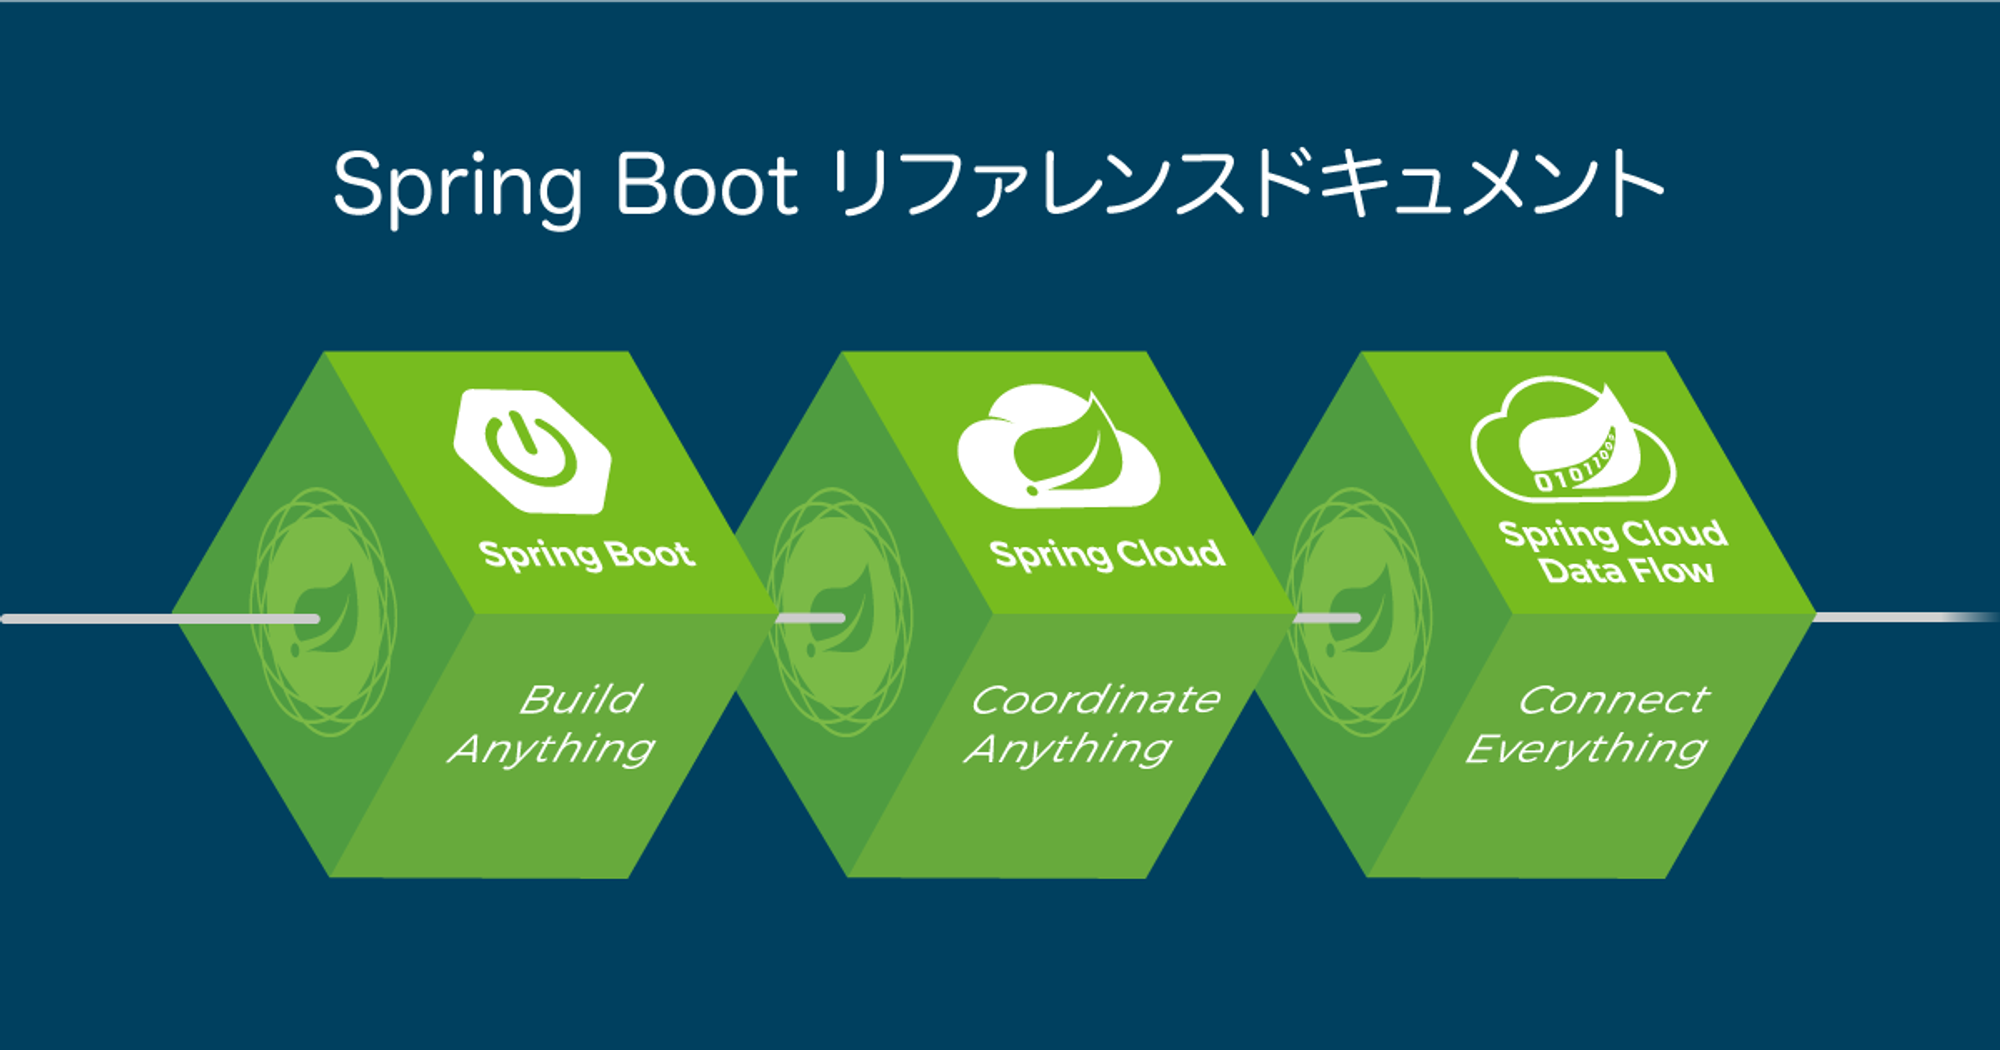 Spring Boot での開発 - リファレンスドキュメント